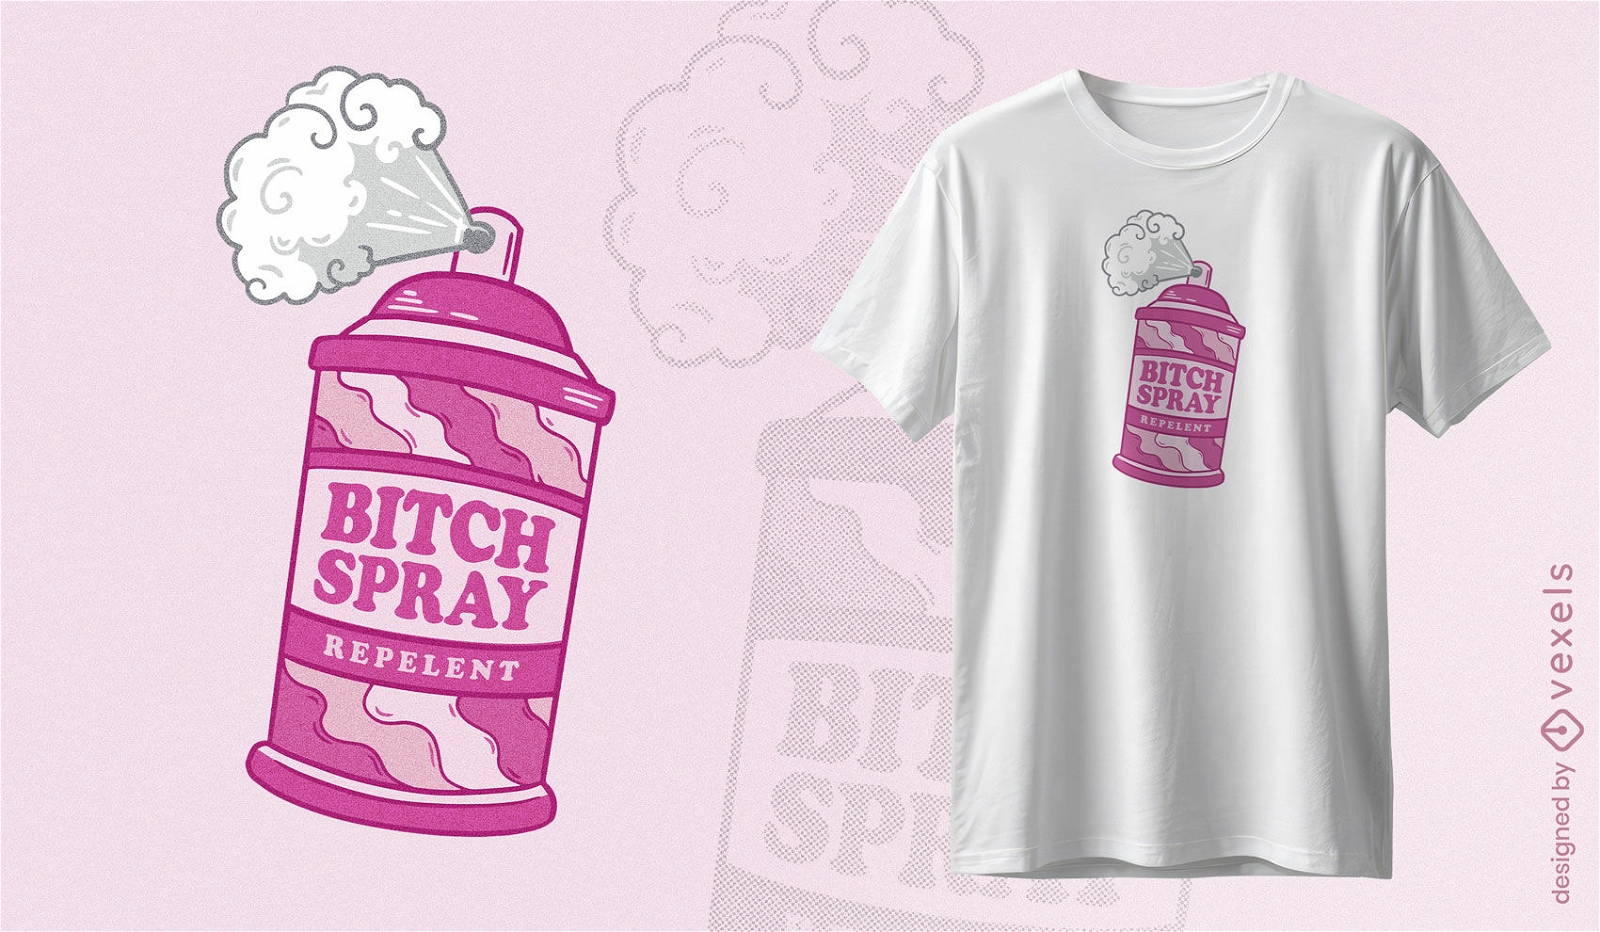 Bitch spray t-shirt design